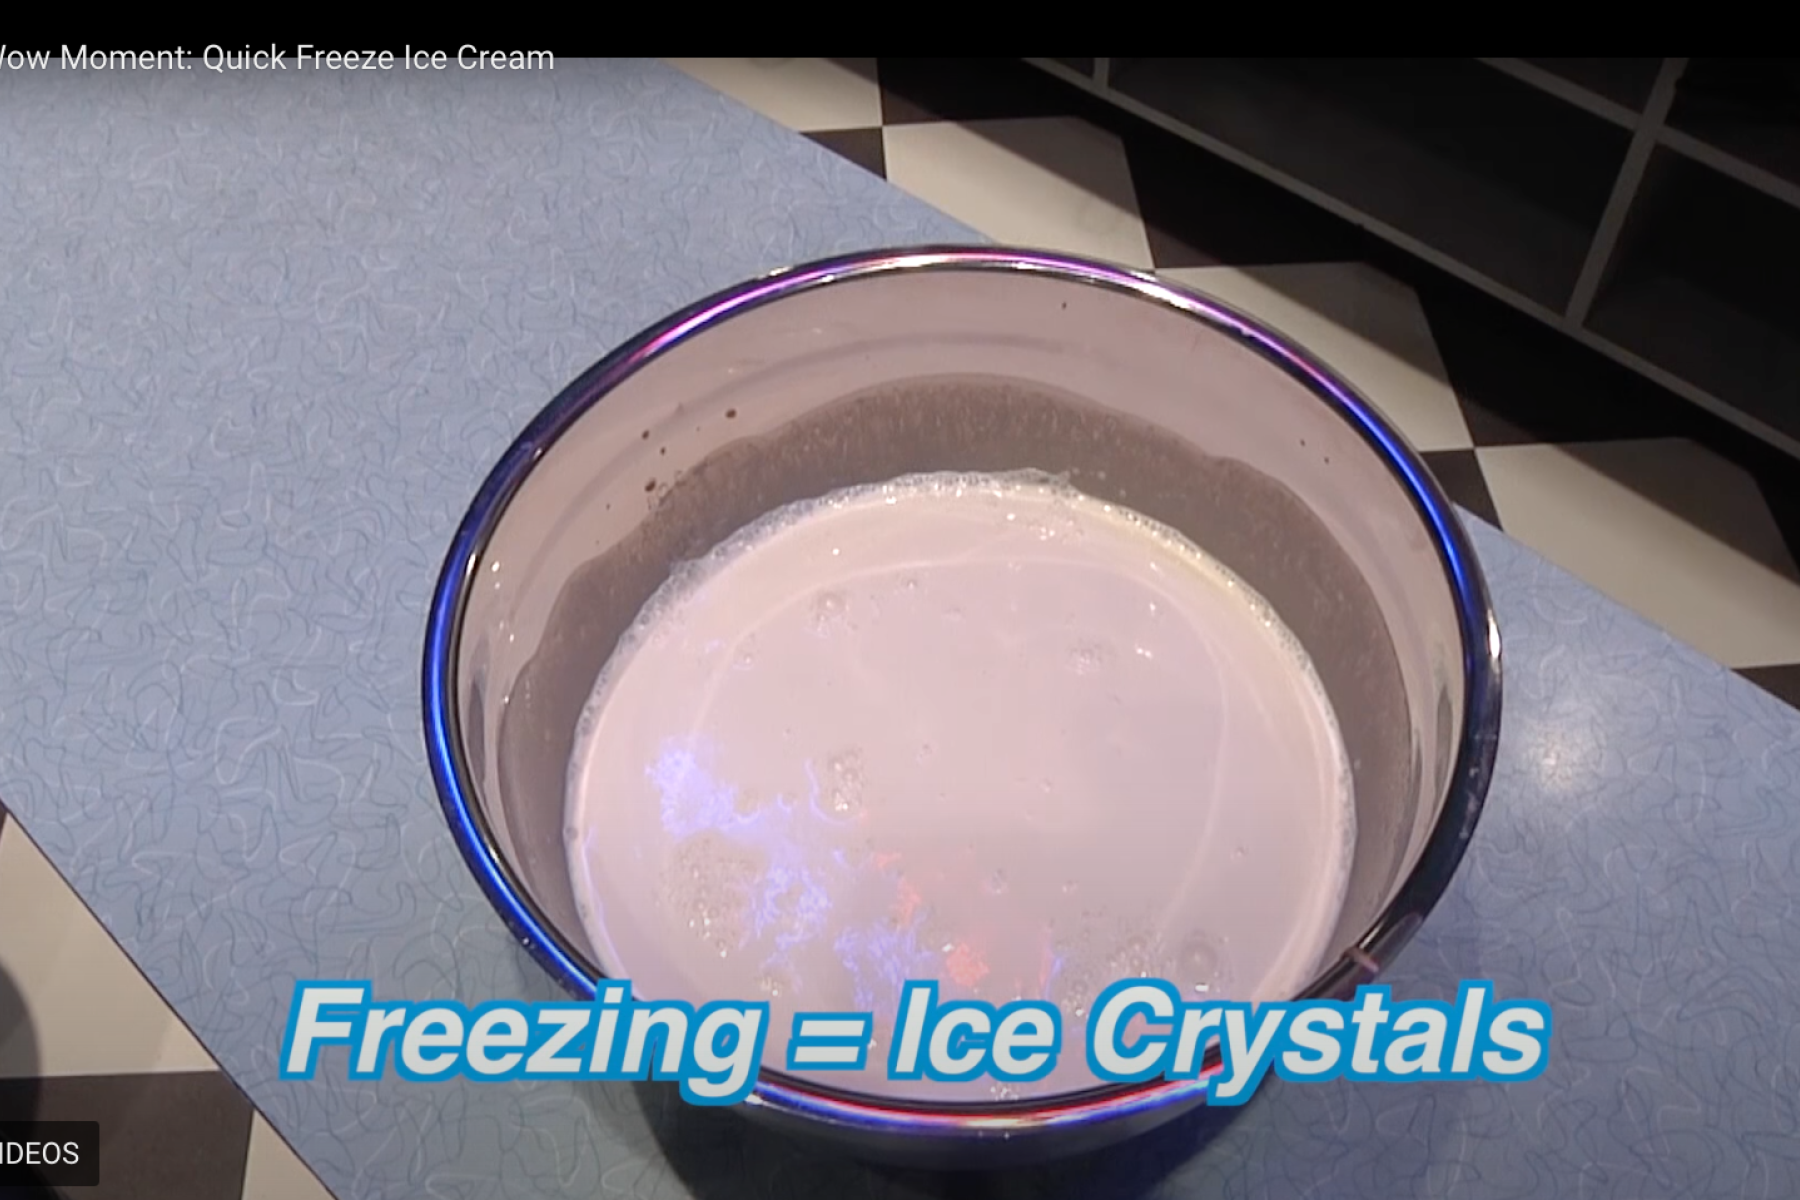 Nano ice cream activity Mr. O video screenshot showing bowl of ingredients freezing